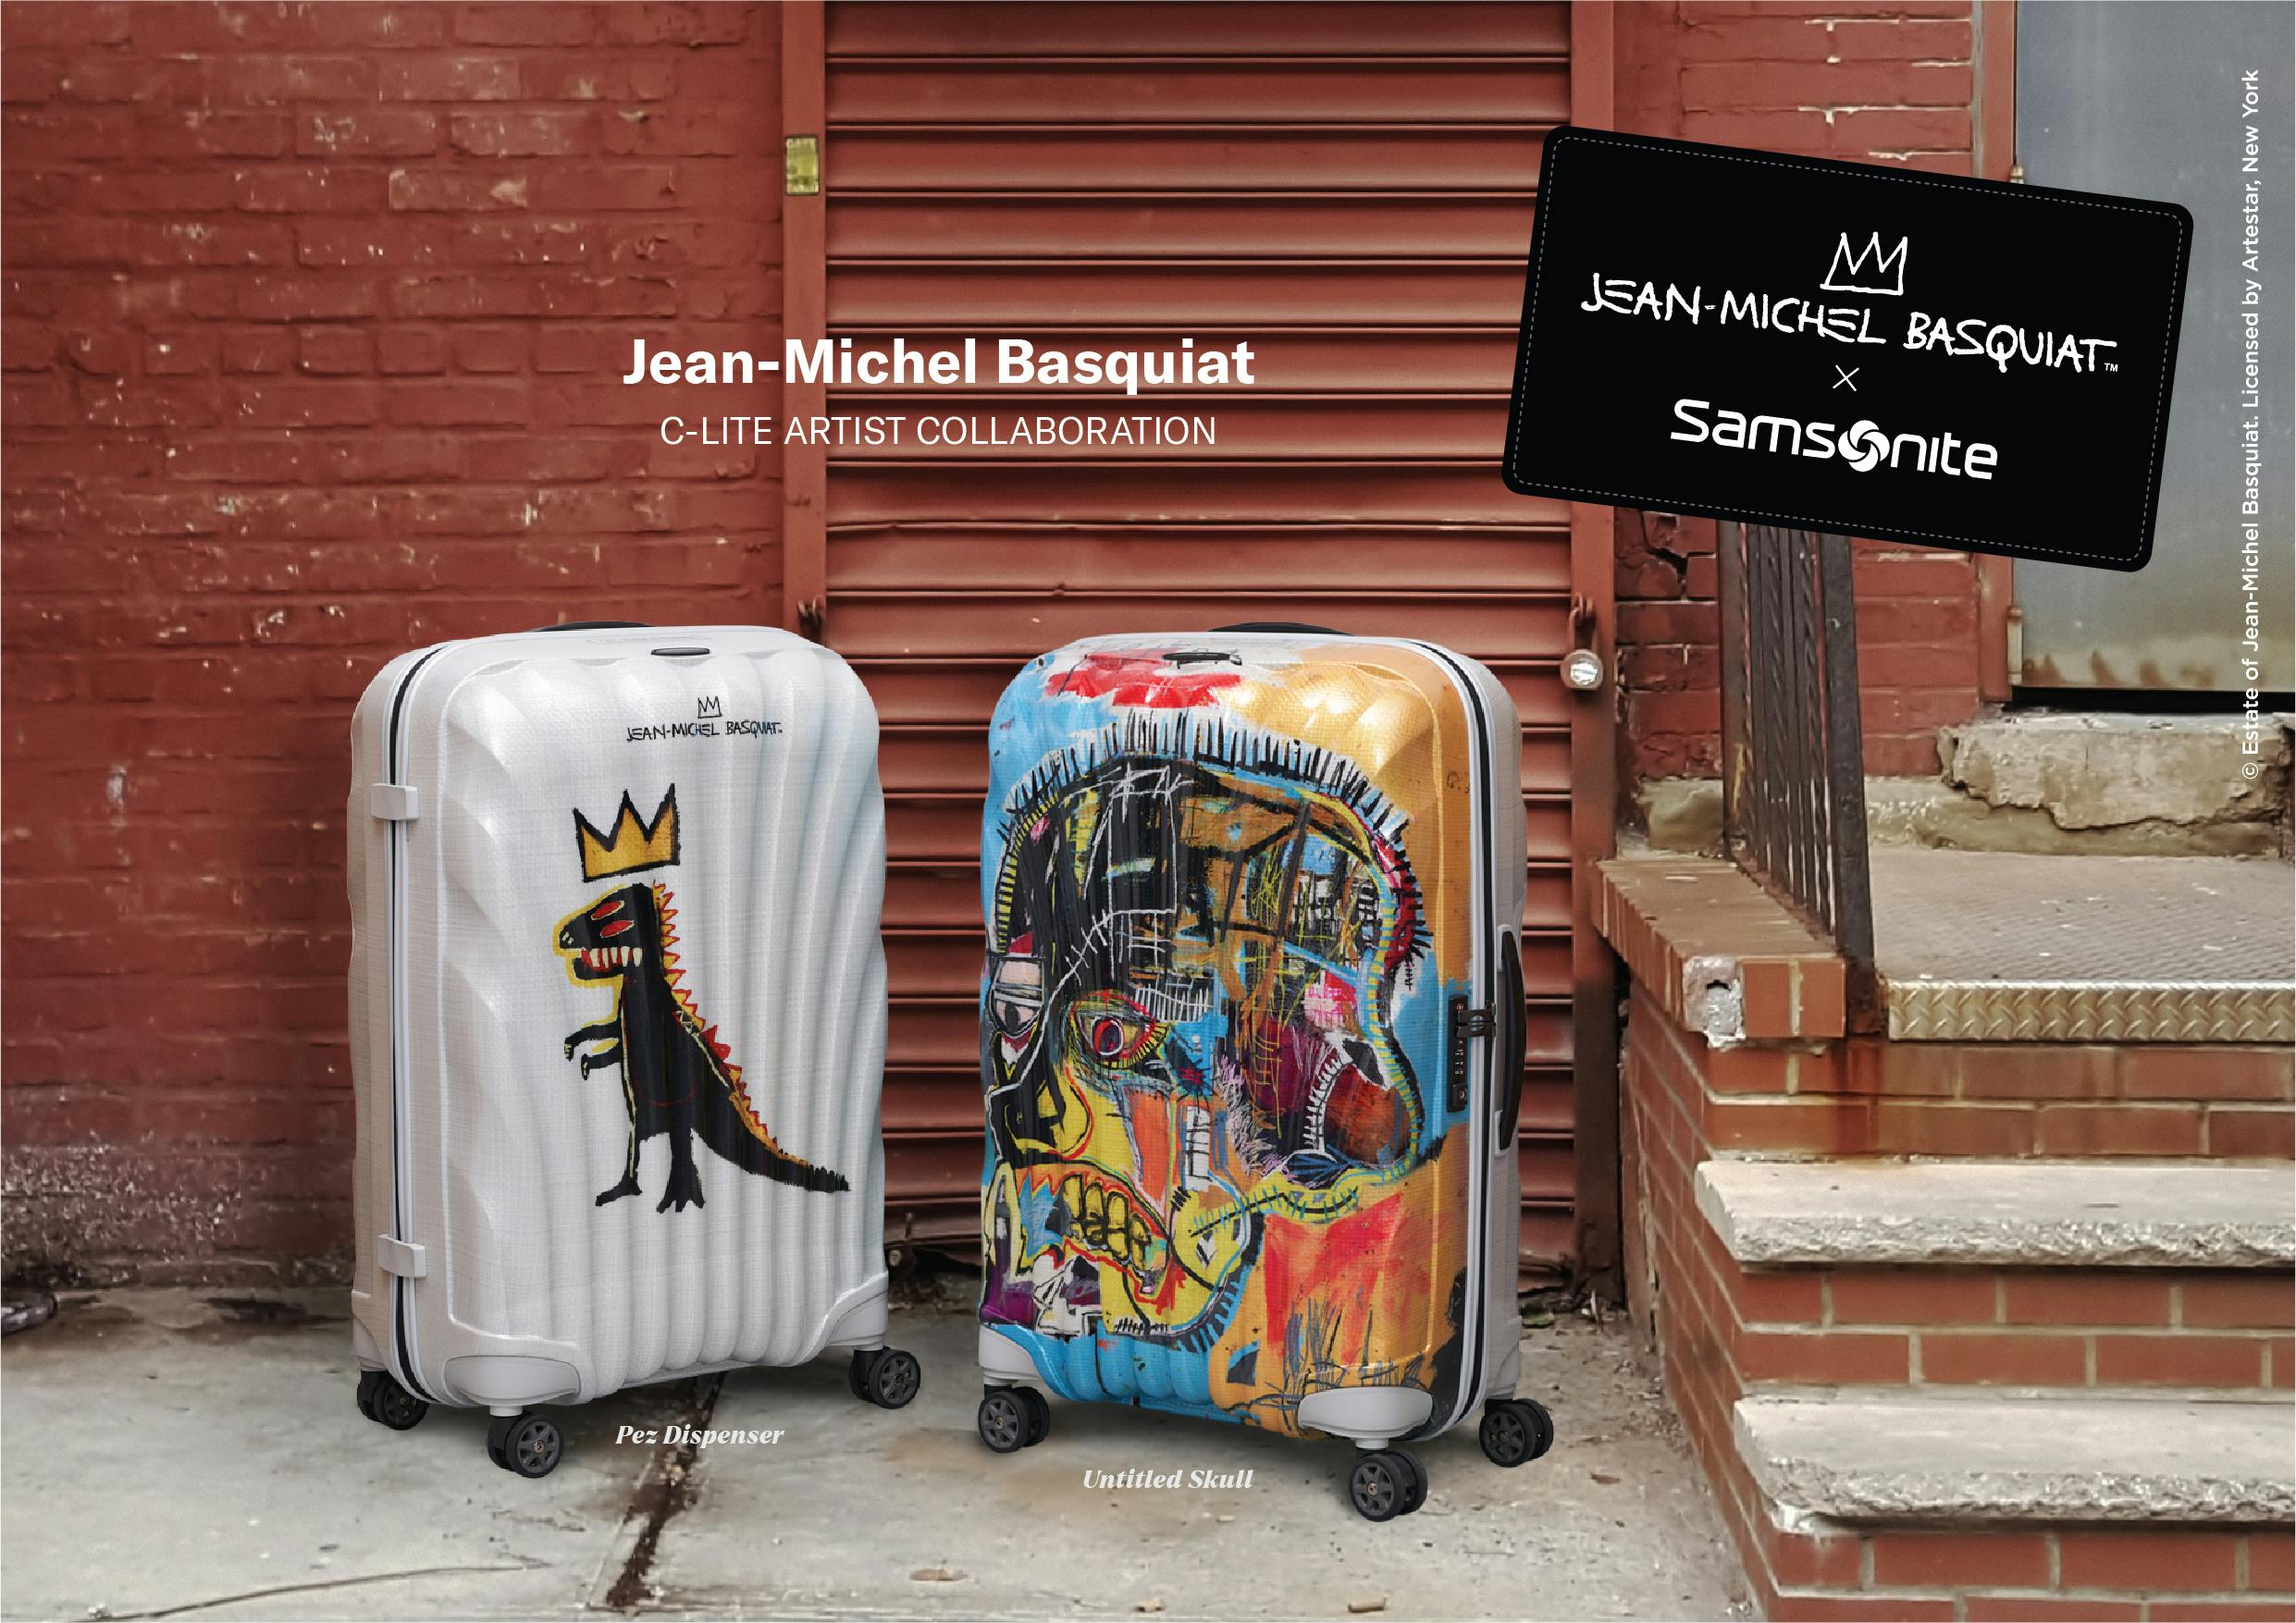 Samsonite Collaborates with the Estate of Jean-Michel Basquiat